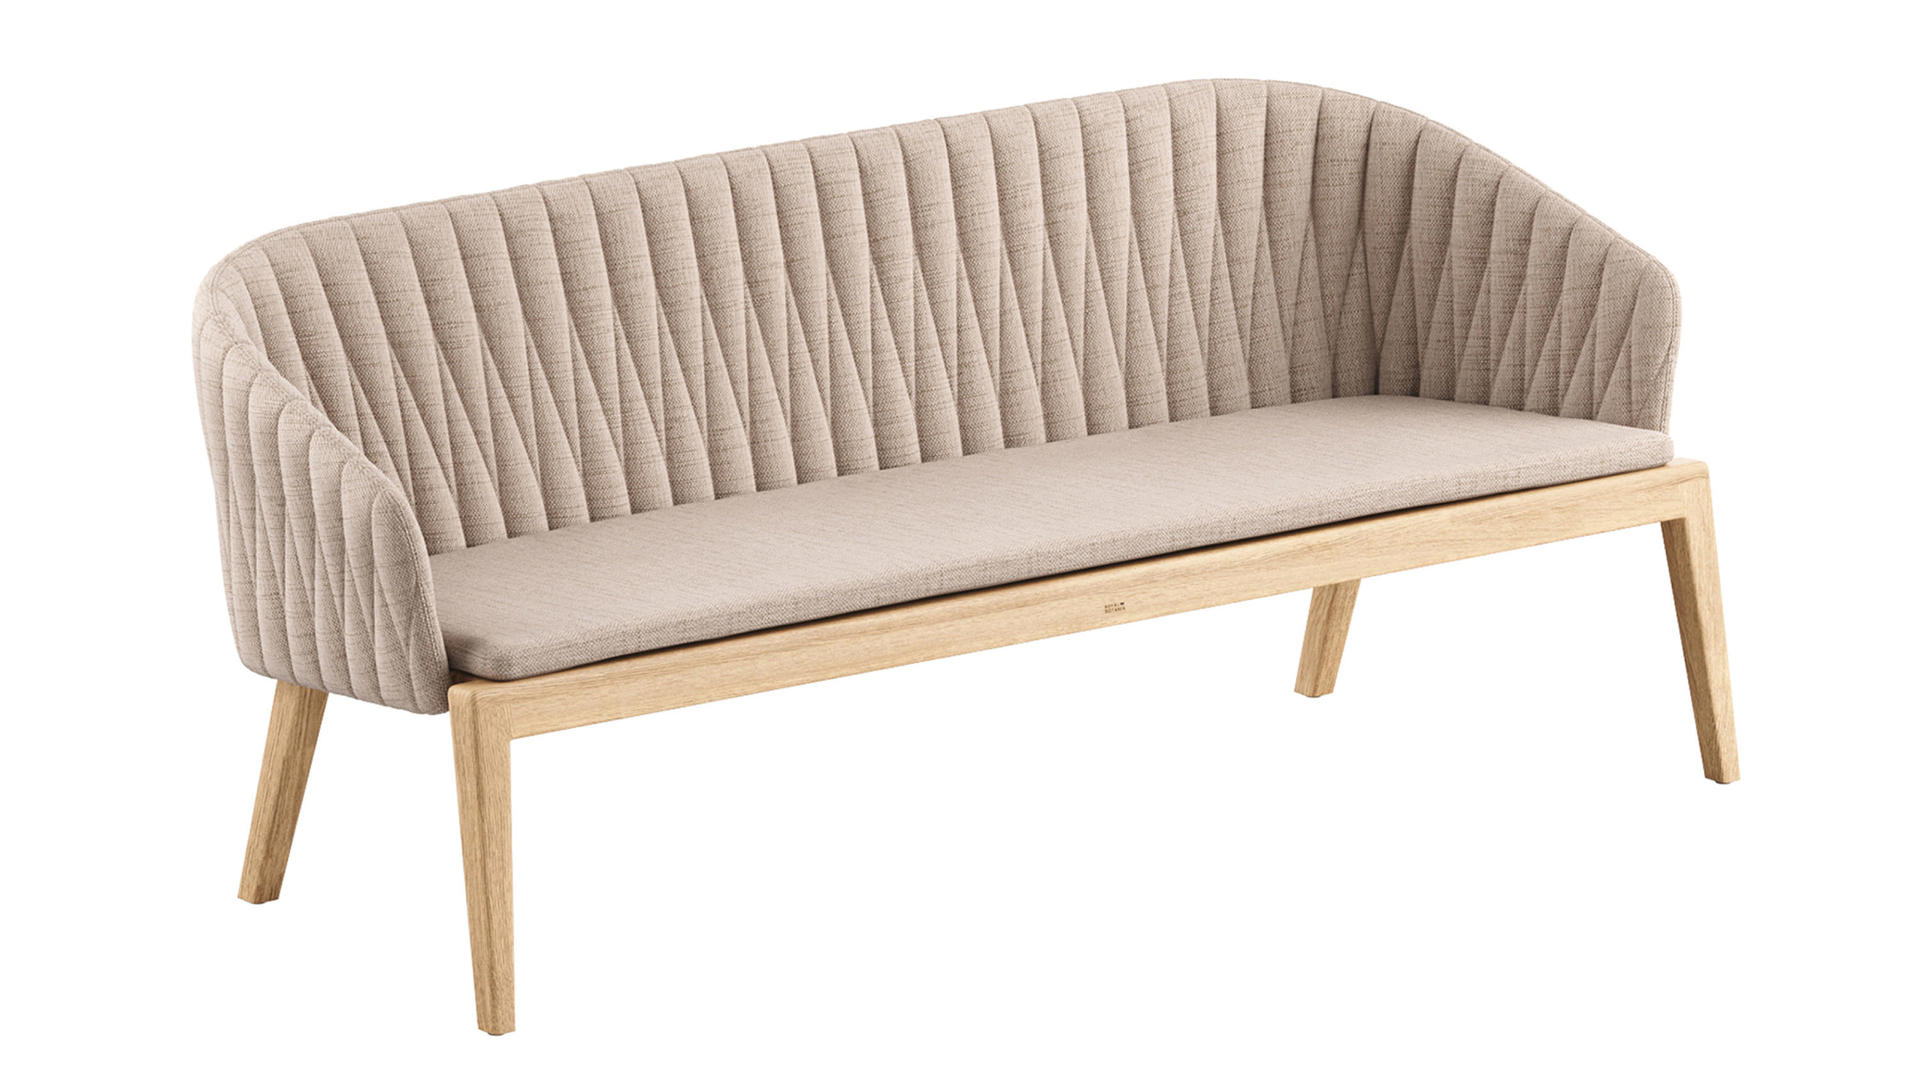 Royal Botania Calypso bench sofa large bank outdoor HORA Barneveld 5.jpg